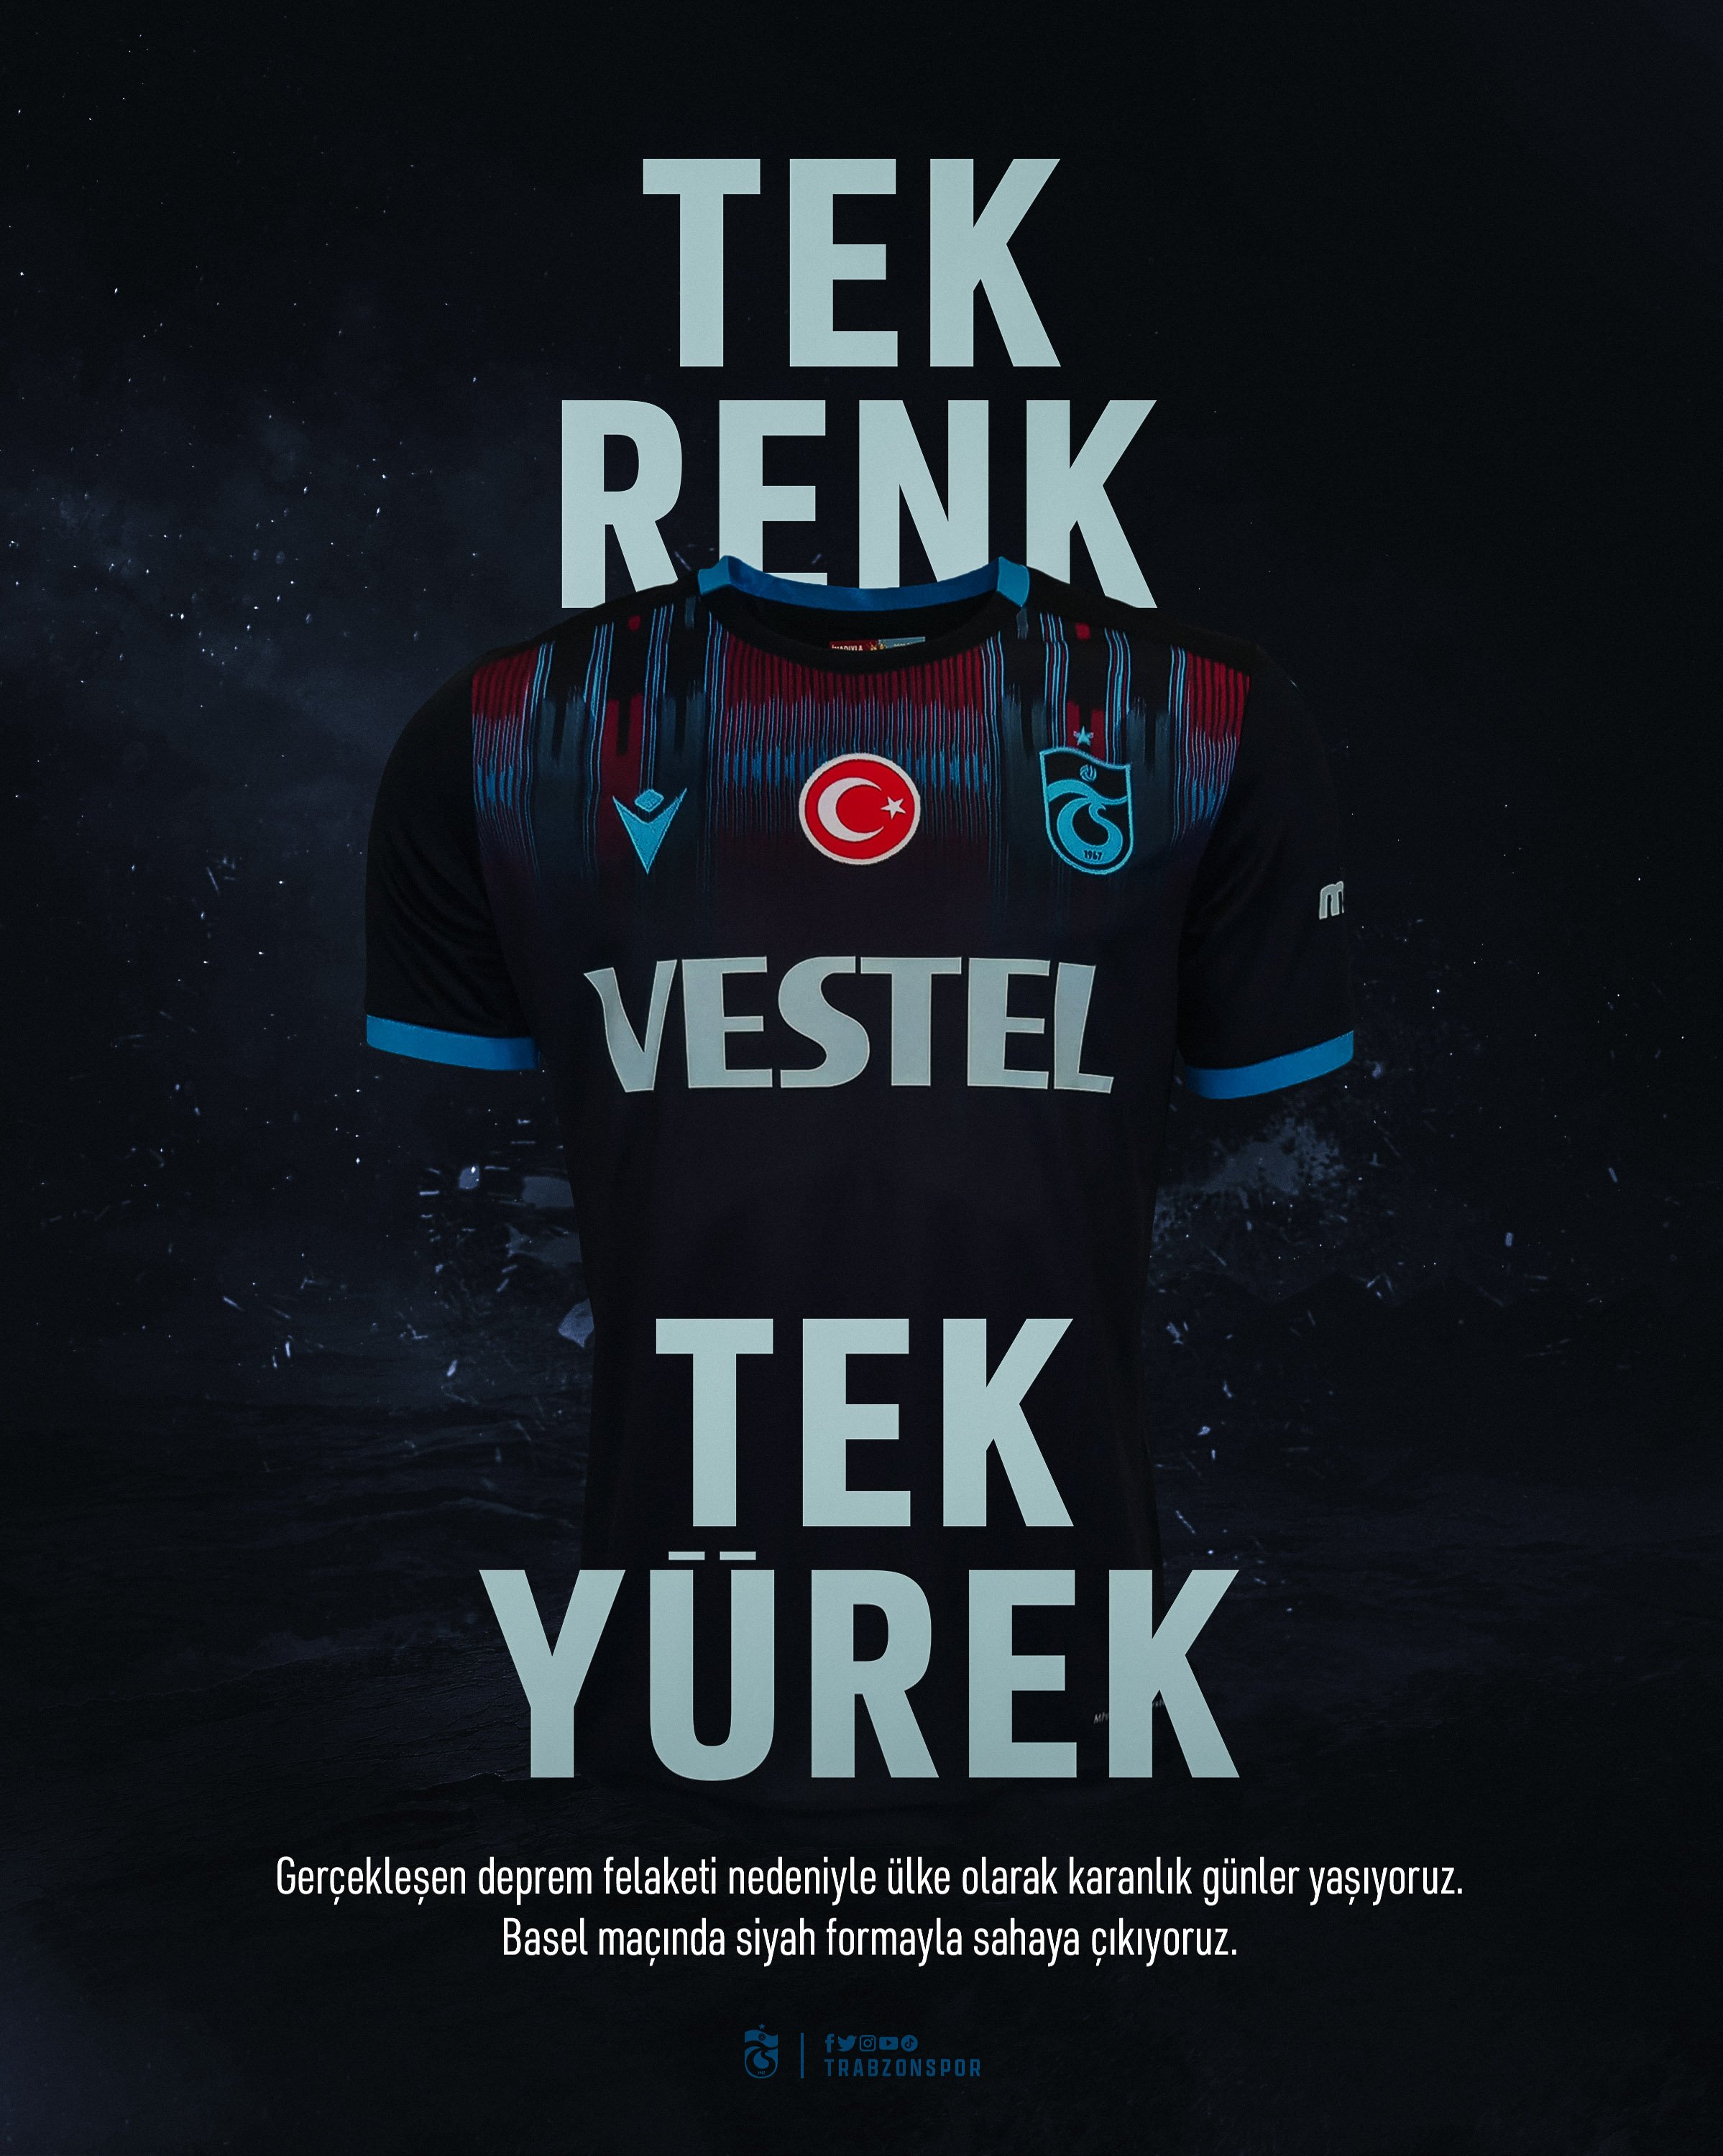 Trabzonspor’dan taraftara davet! Tek renk tek yürek